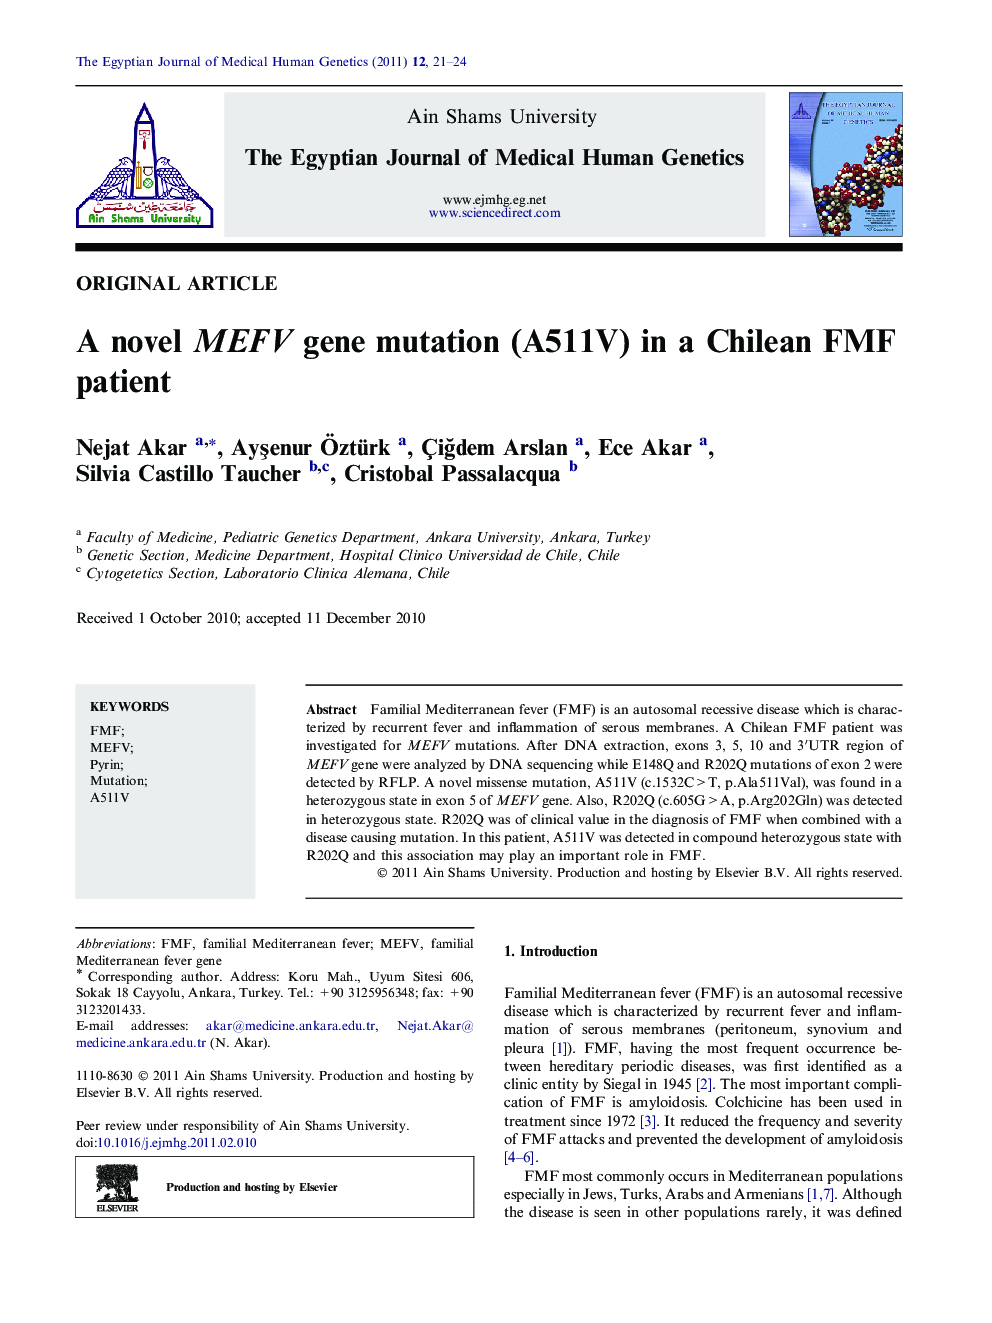 A novel MEFV gene mutation (A511V) in a Chilean FMF patient